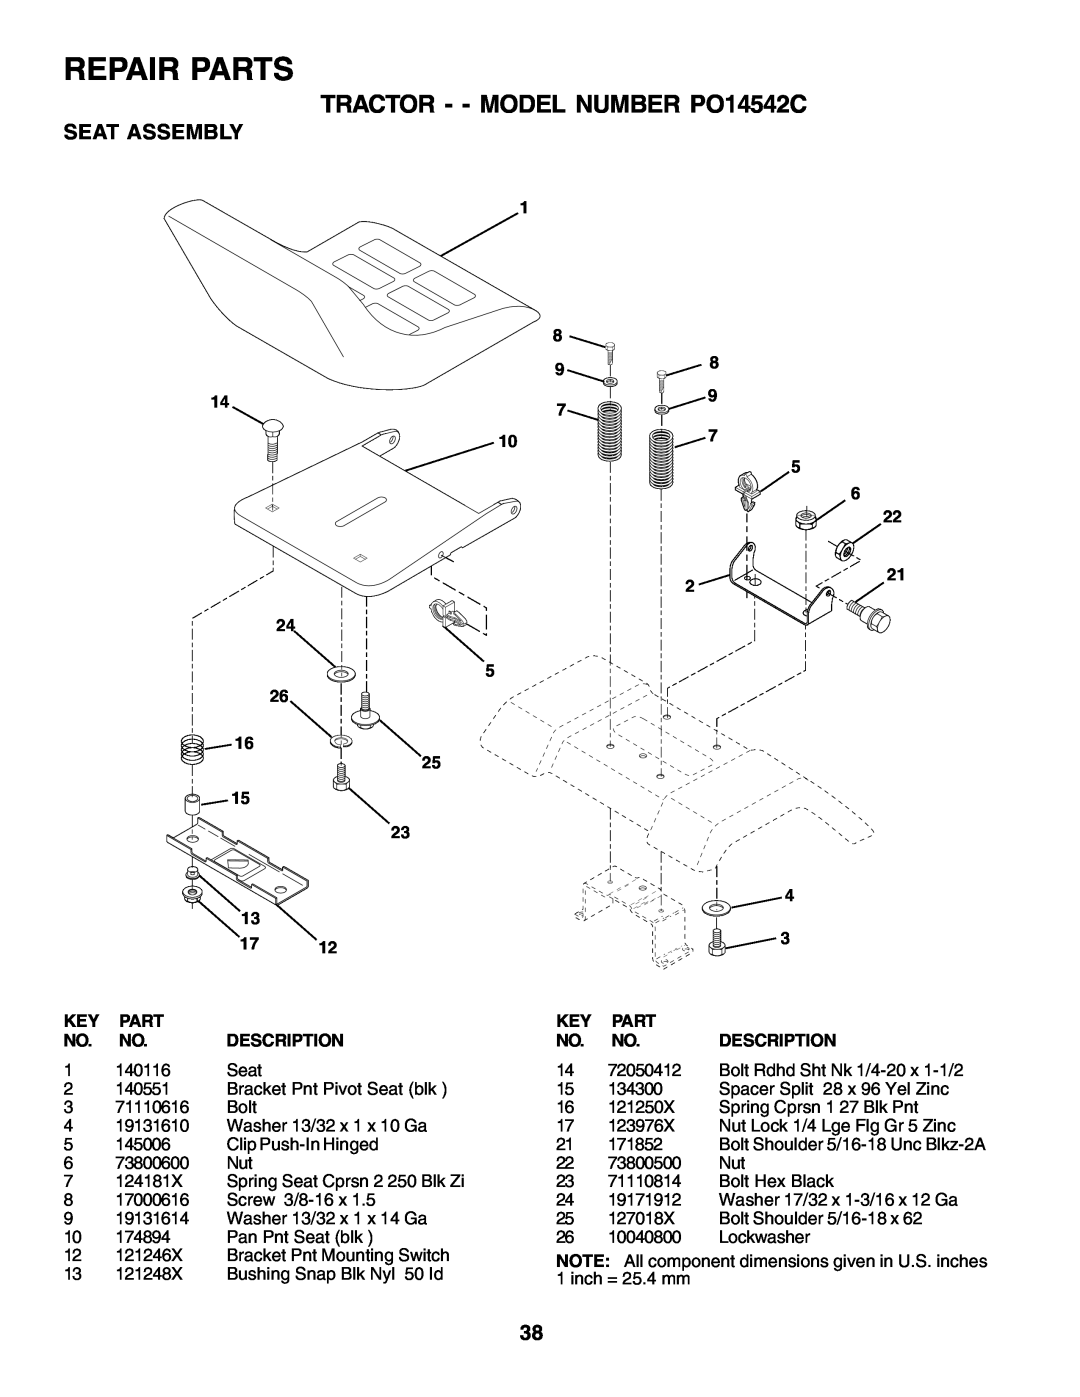 Poulan manual Repair Parts, TRACTOR - - MODEL NUMBER PO14542C, Seat Assembly, Description 